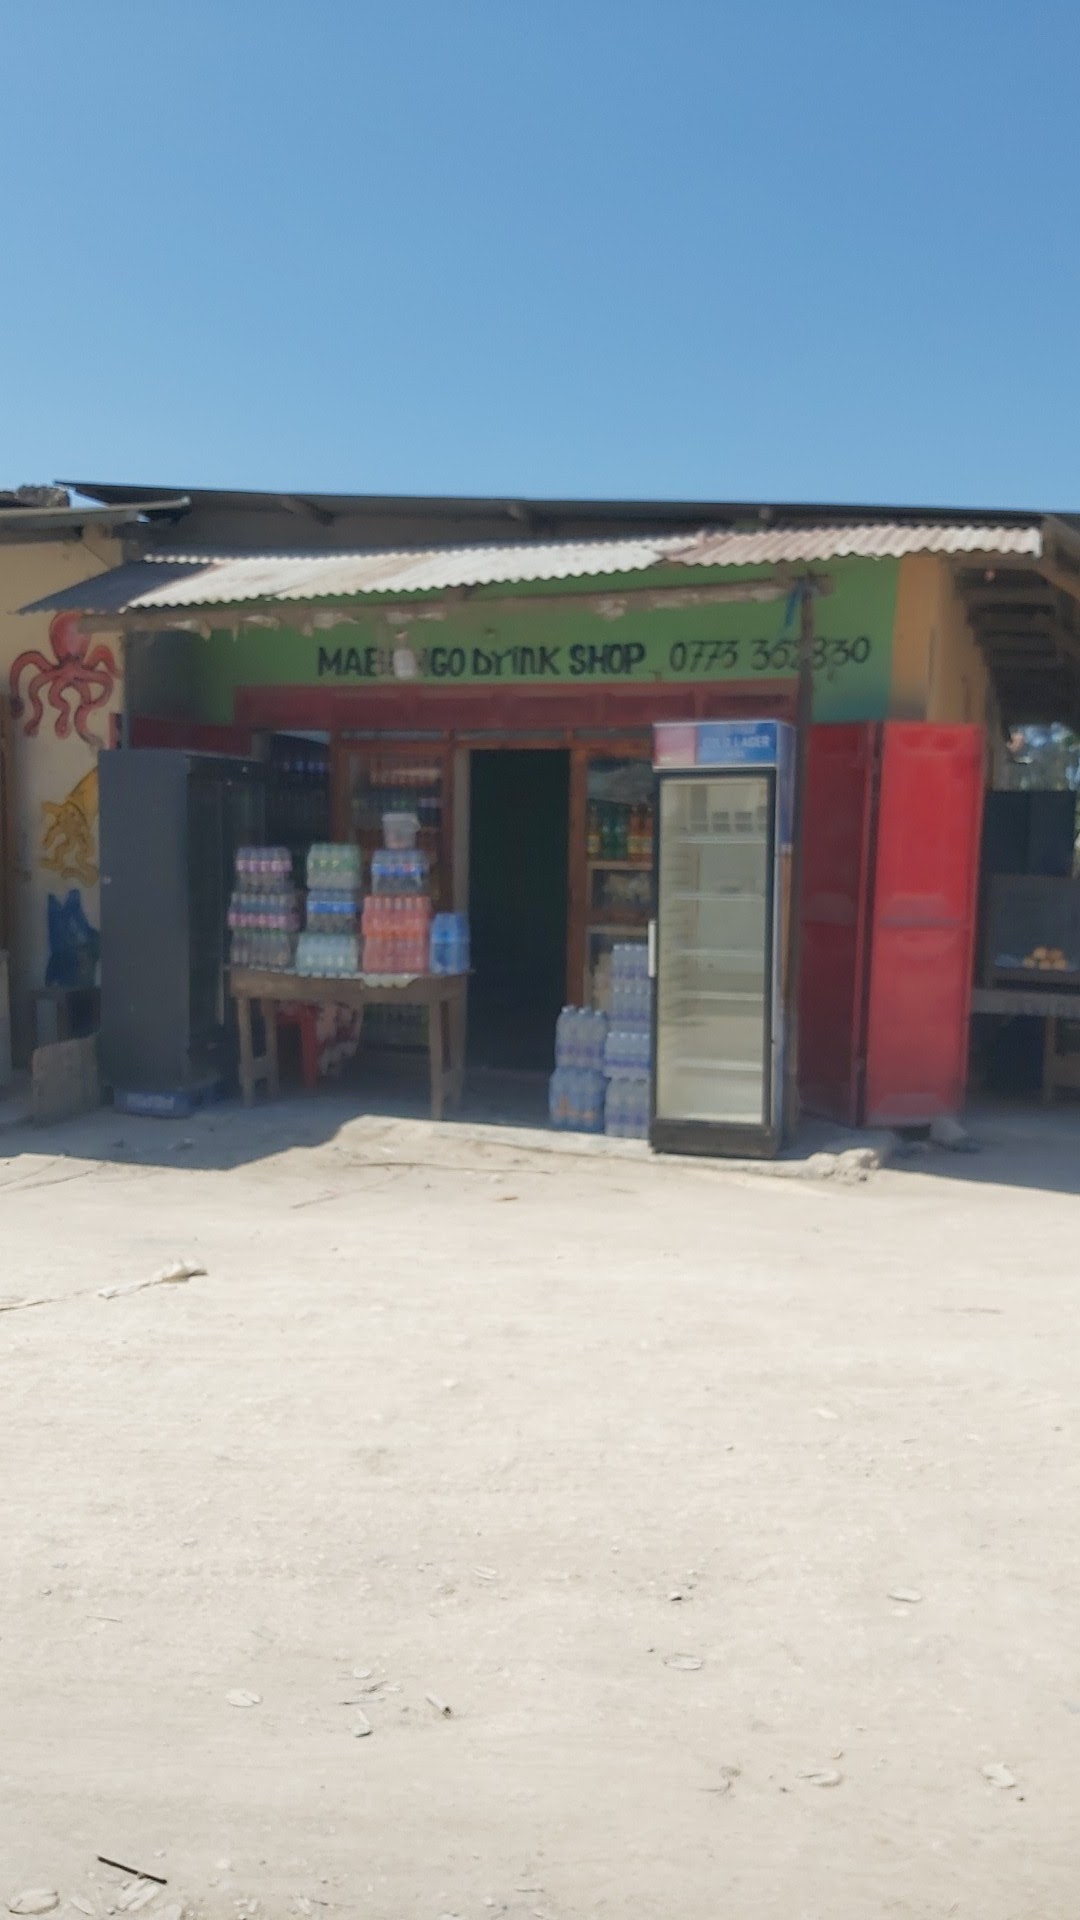 Mabungo drink shop